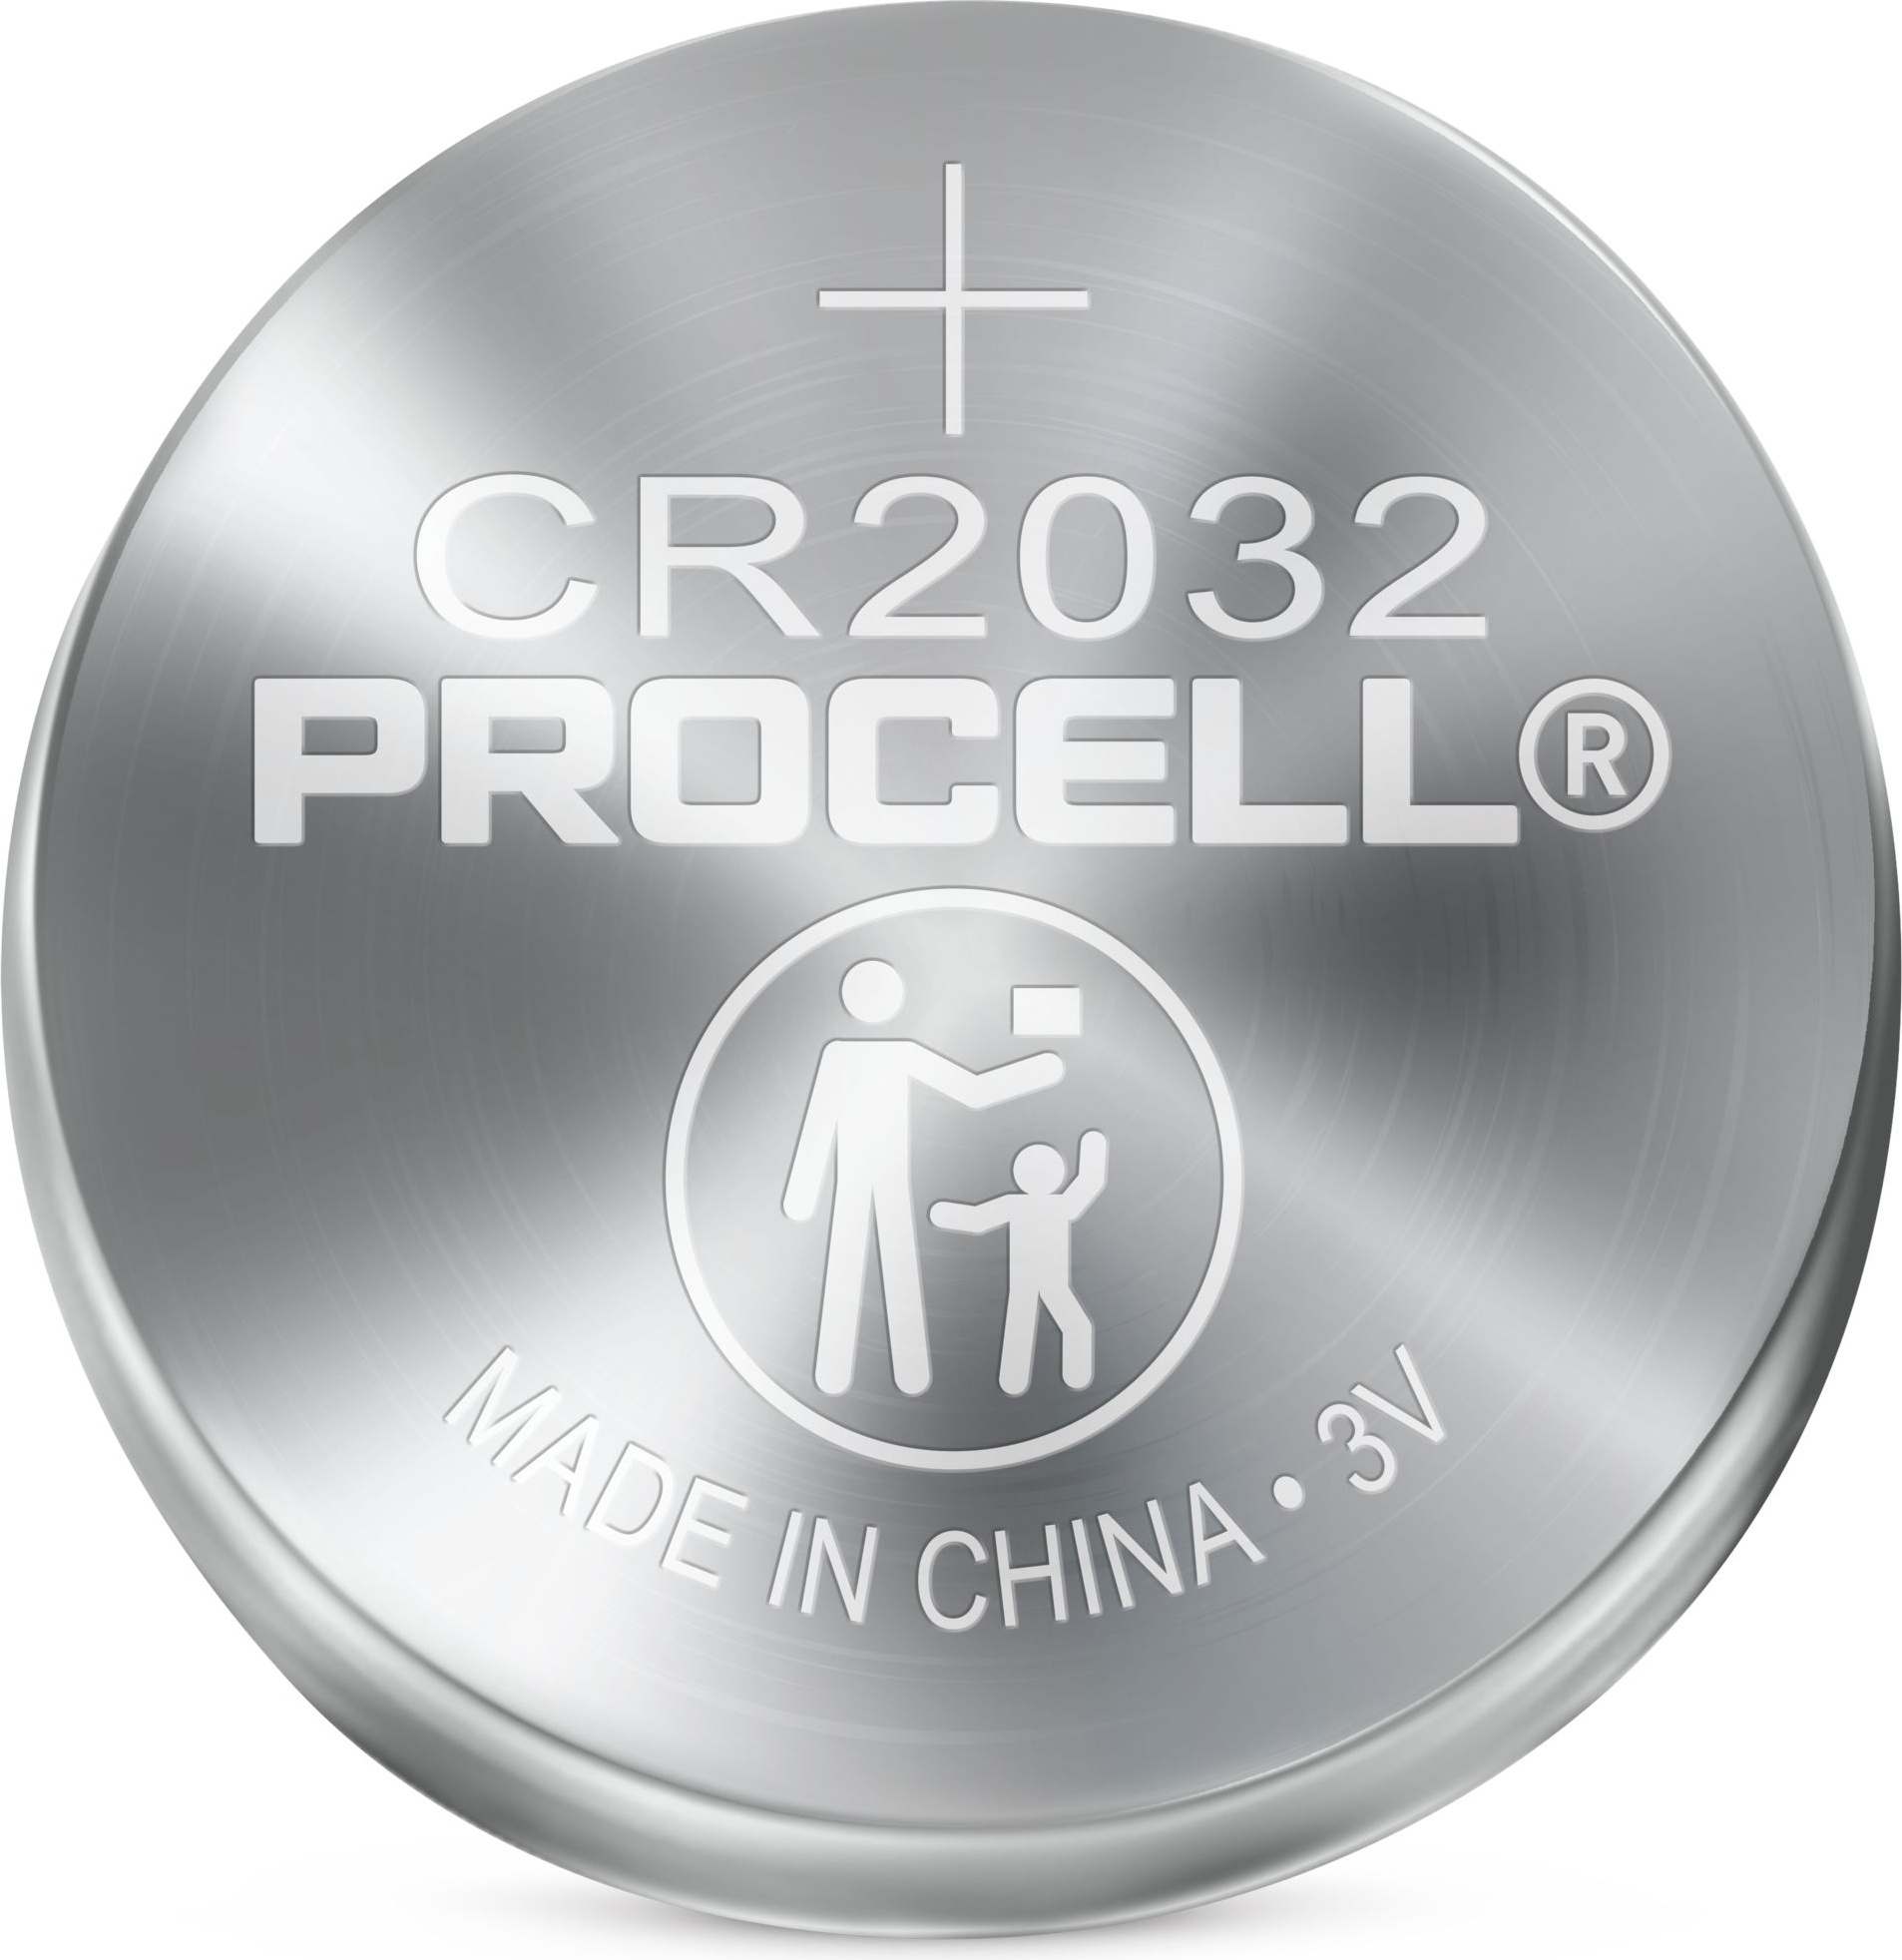 Duracell Duracell Procell pile bouton au lithium CR2032 3V 245mAh -5 pièces  